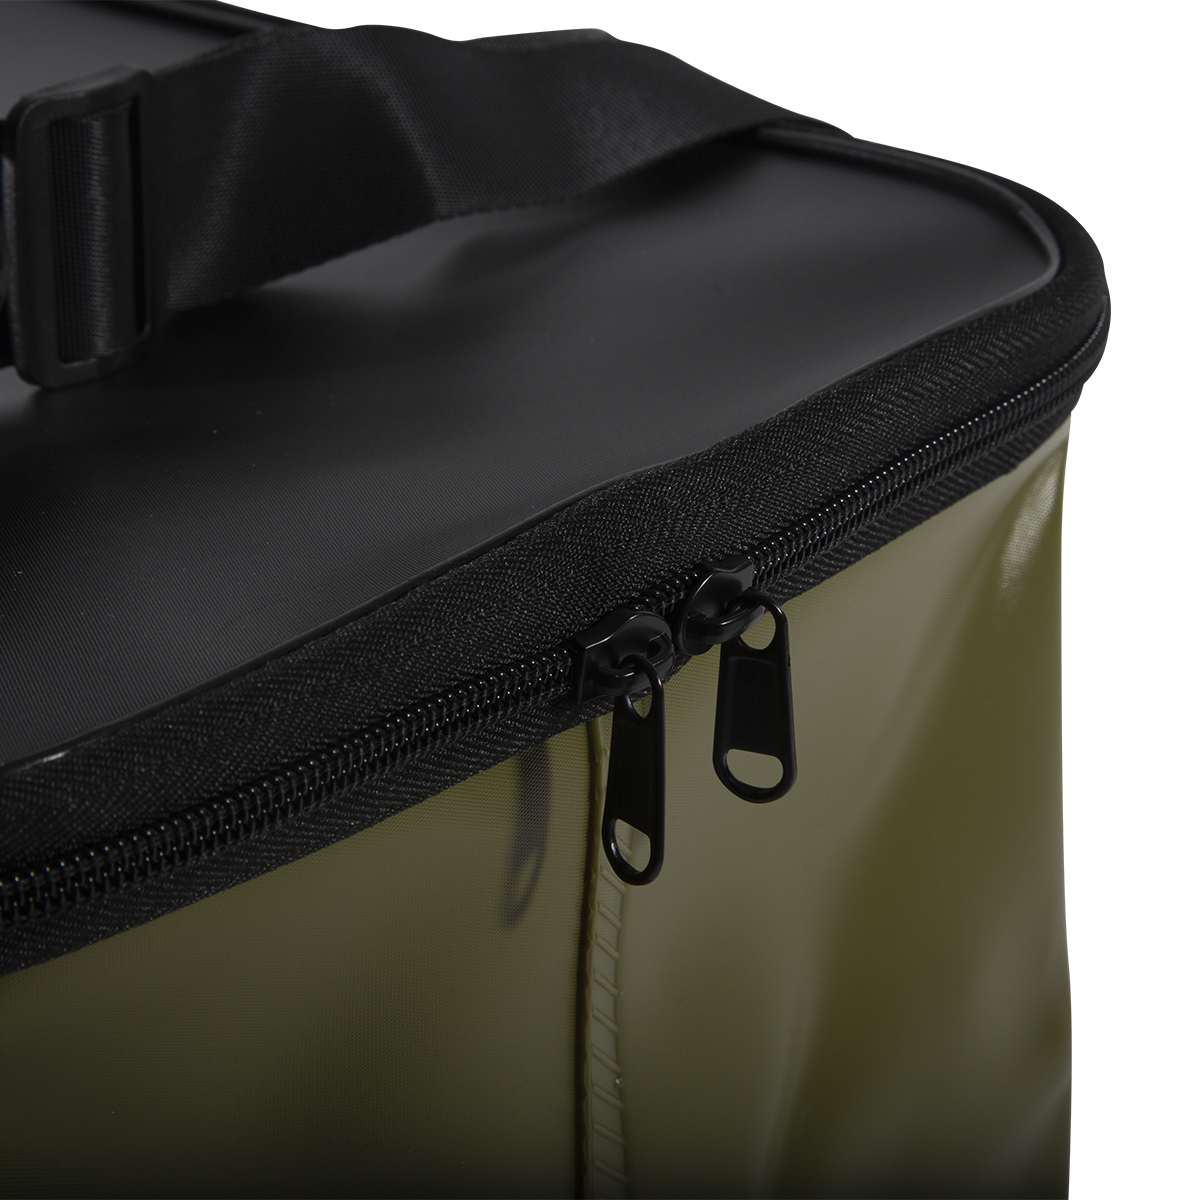 Tactic Carp Waterproof Luggage